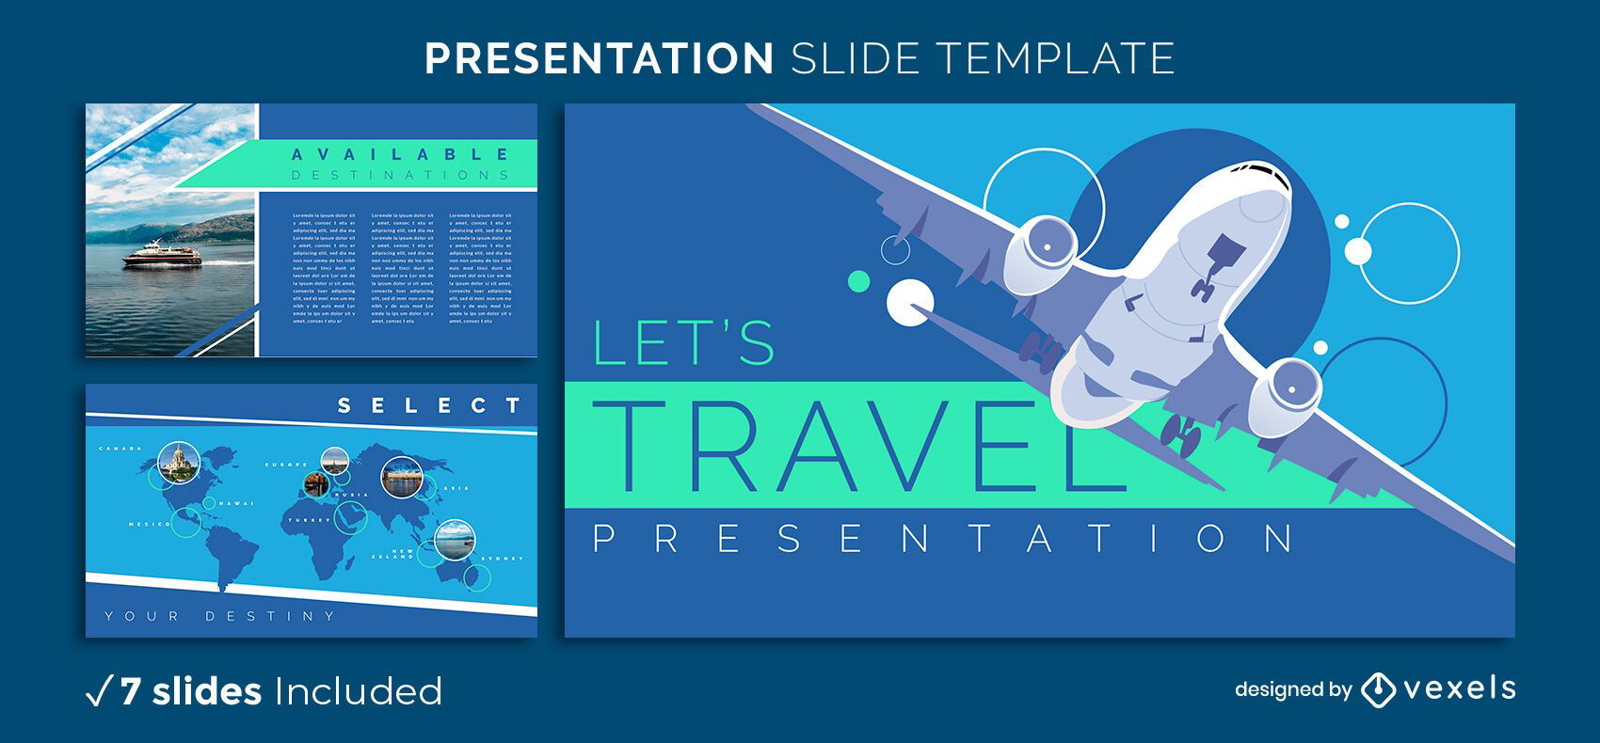 Travel Presentation Template